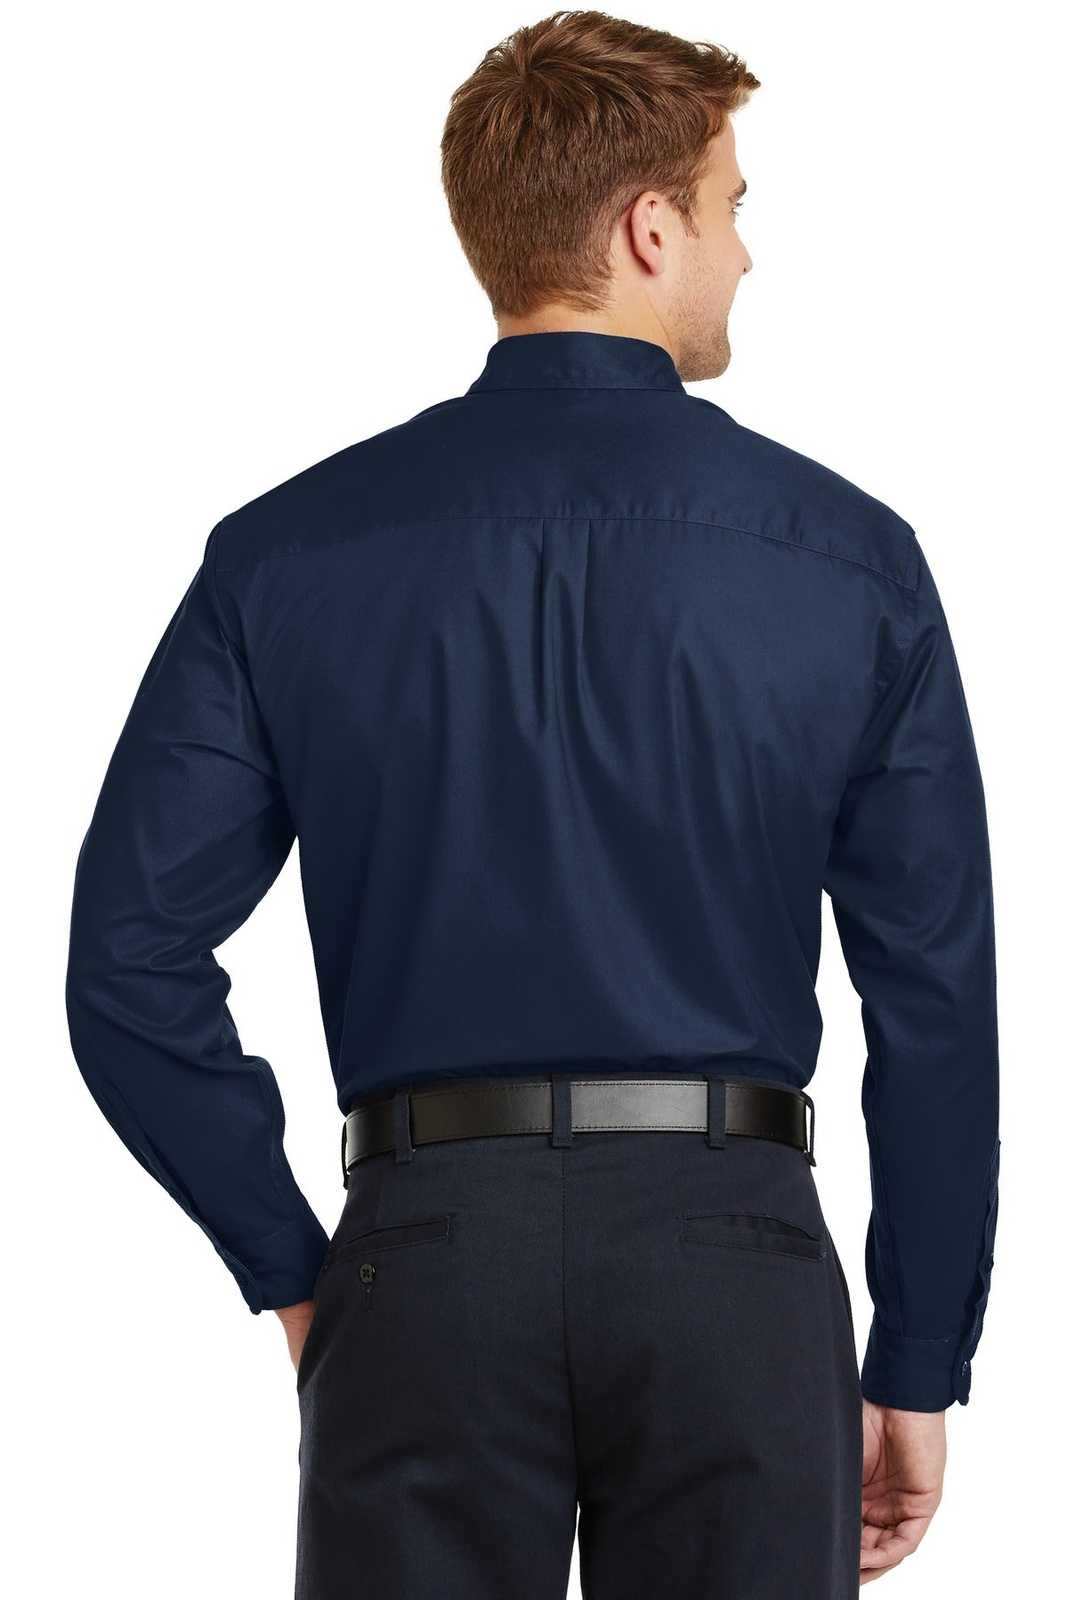 CornerStone SP17 Long Sleeve Superpro Twill Shirt - Navy - HIT a Double - 1